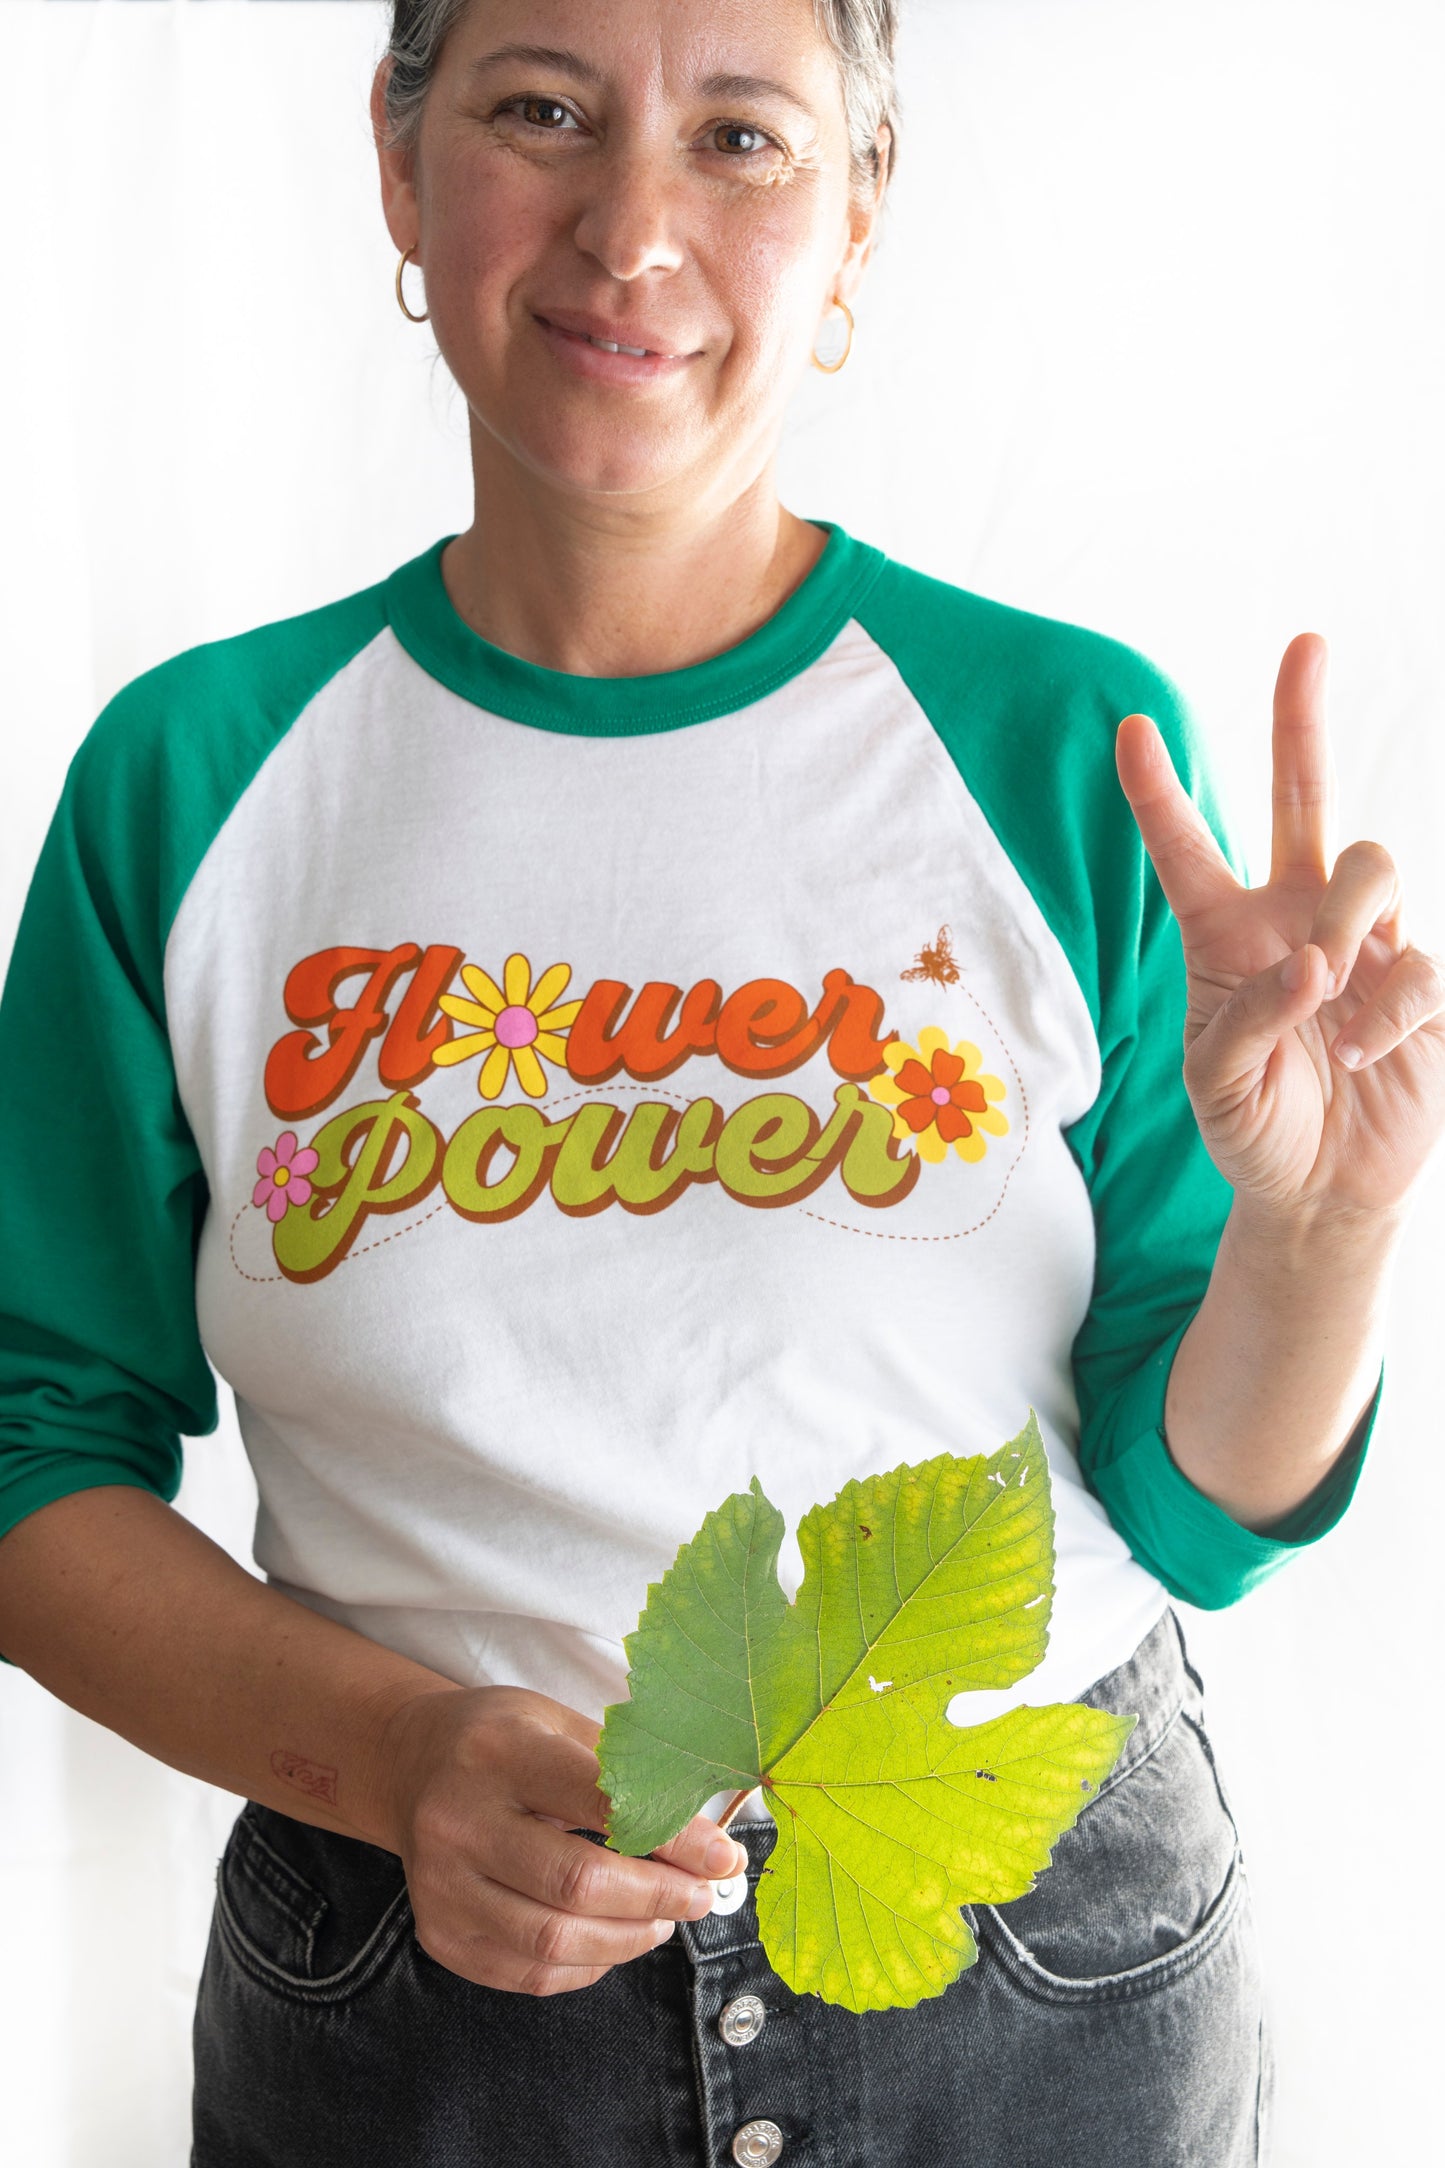 Flower power raglan tee shirt with green sleeves